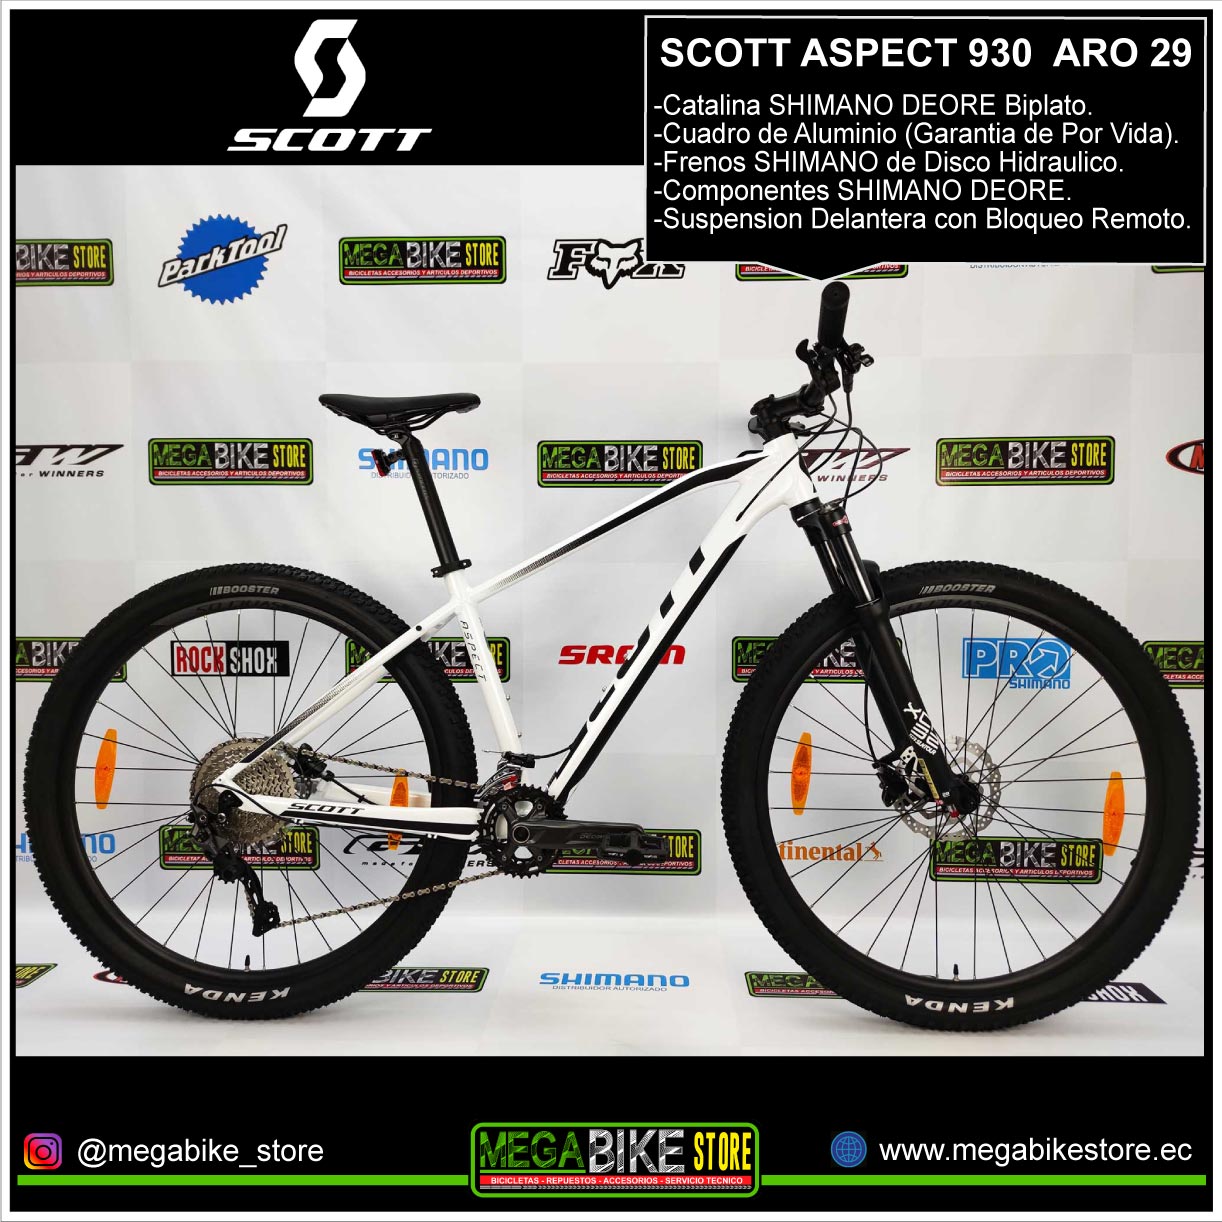 Shimano Deore Bicicleta Montañera SCOTT ASPECT ARO 29